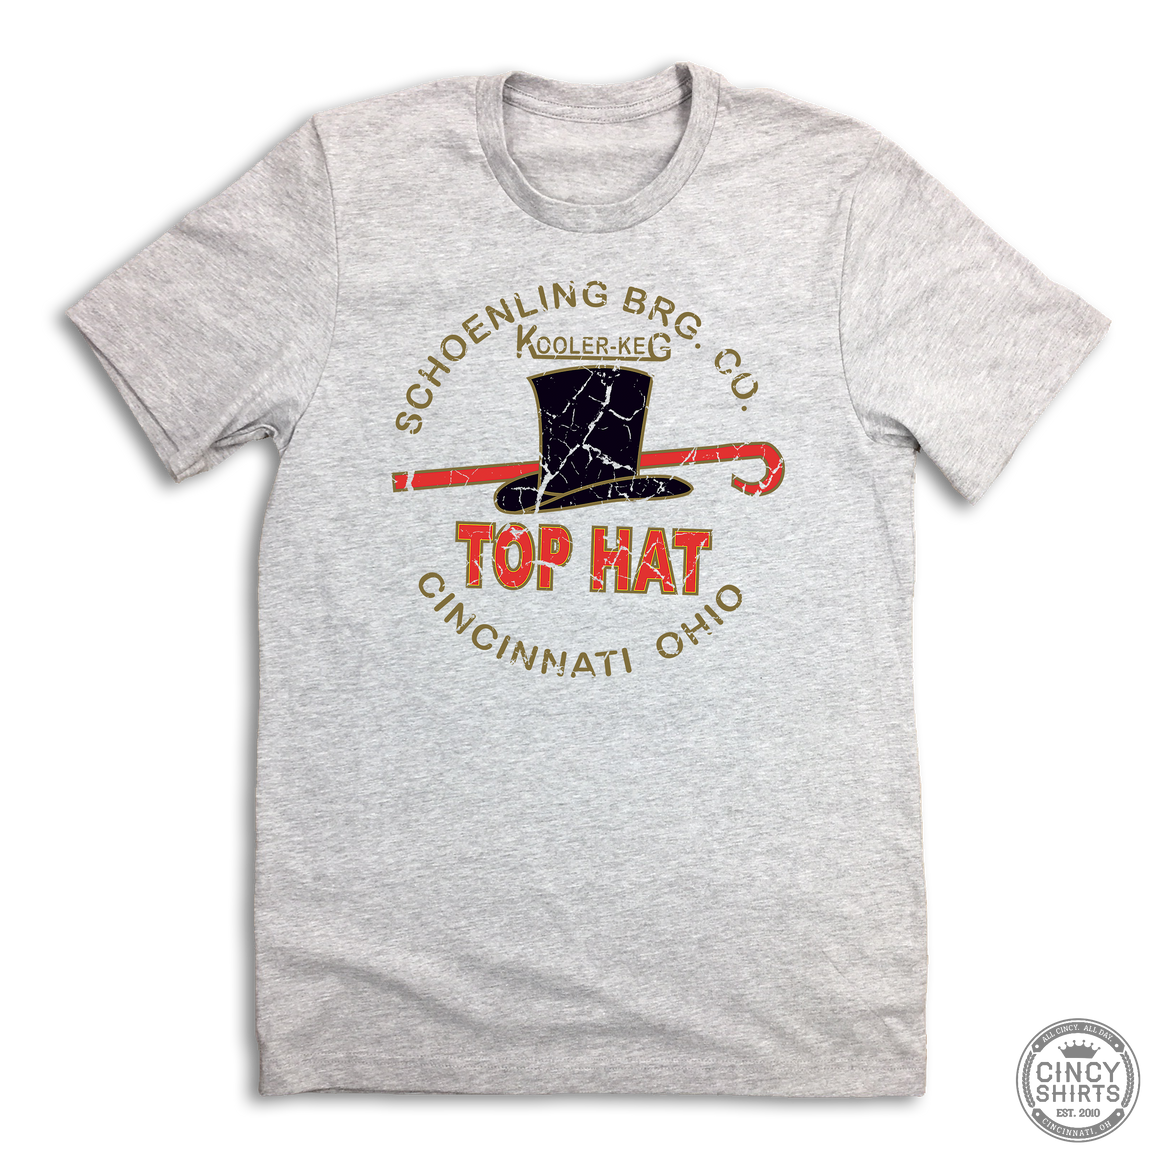 Top Hat - Cincy Shirts